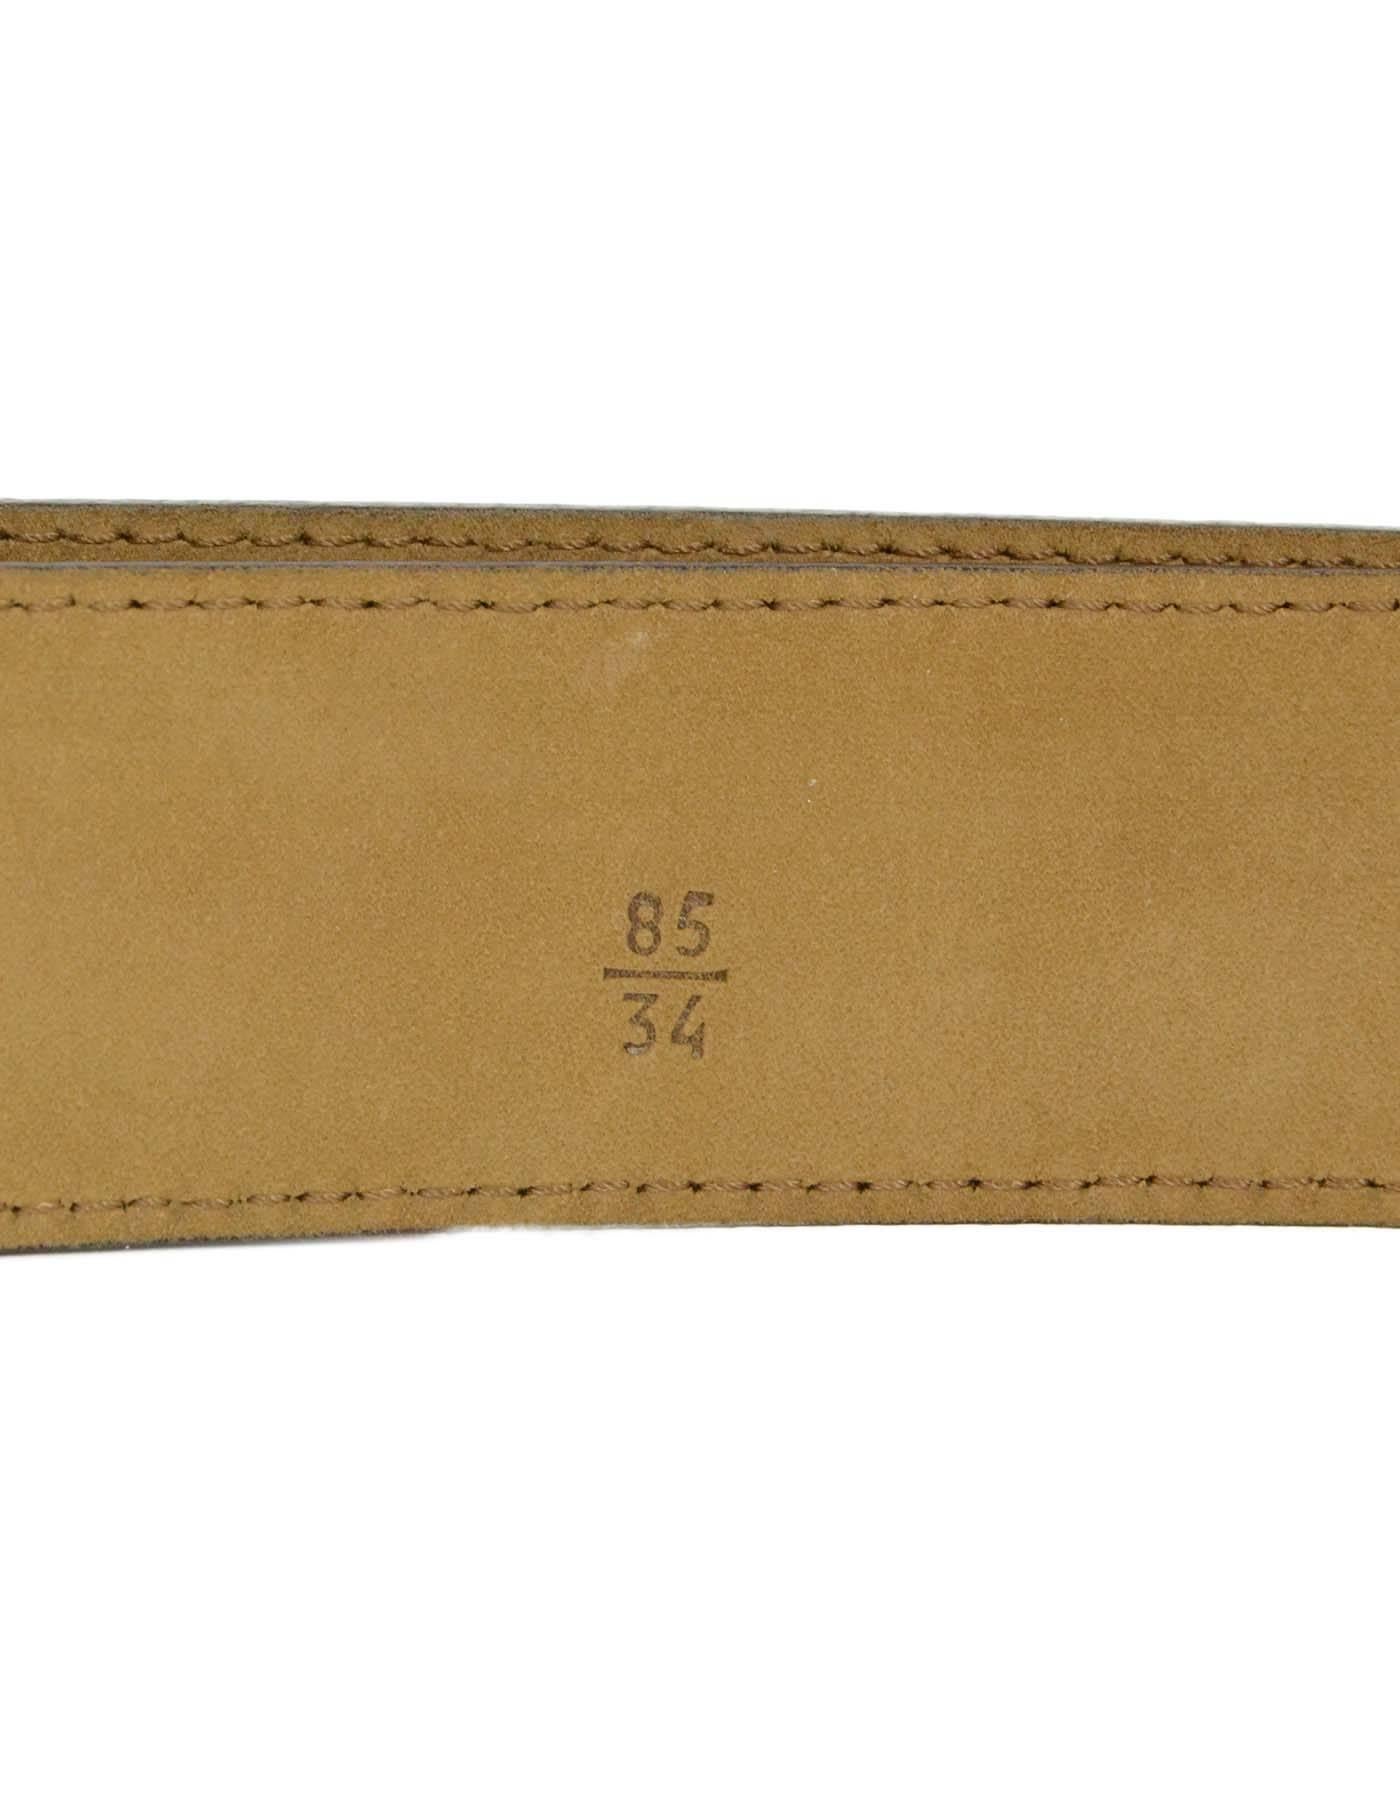 Prada Brown Distressed Leather Belt sz 85 GHW 2